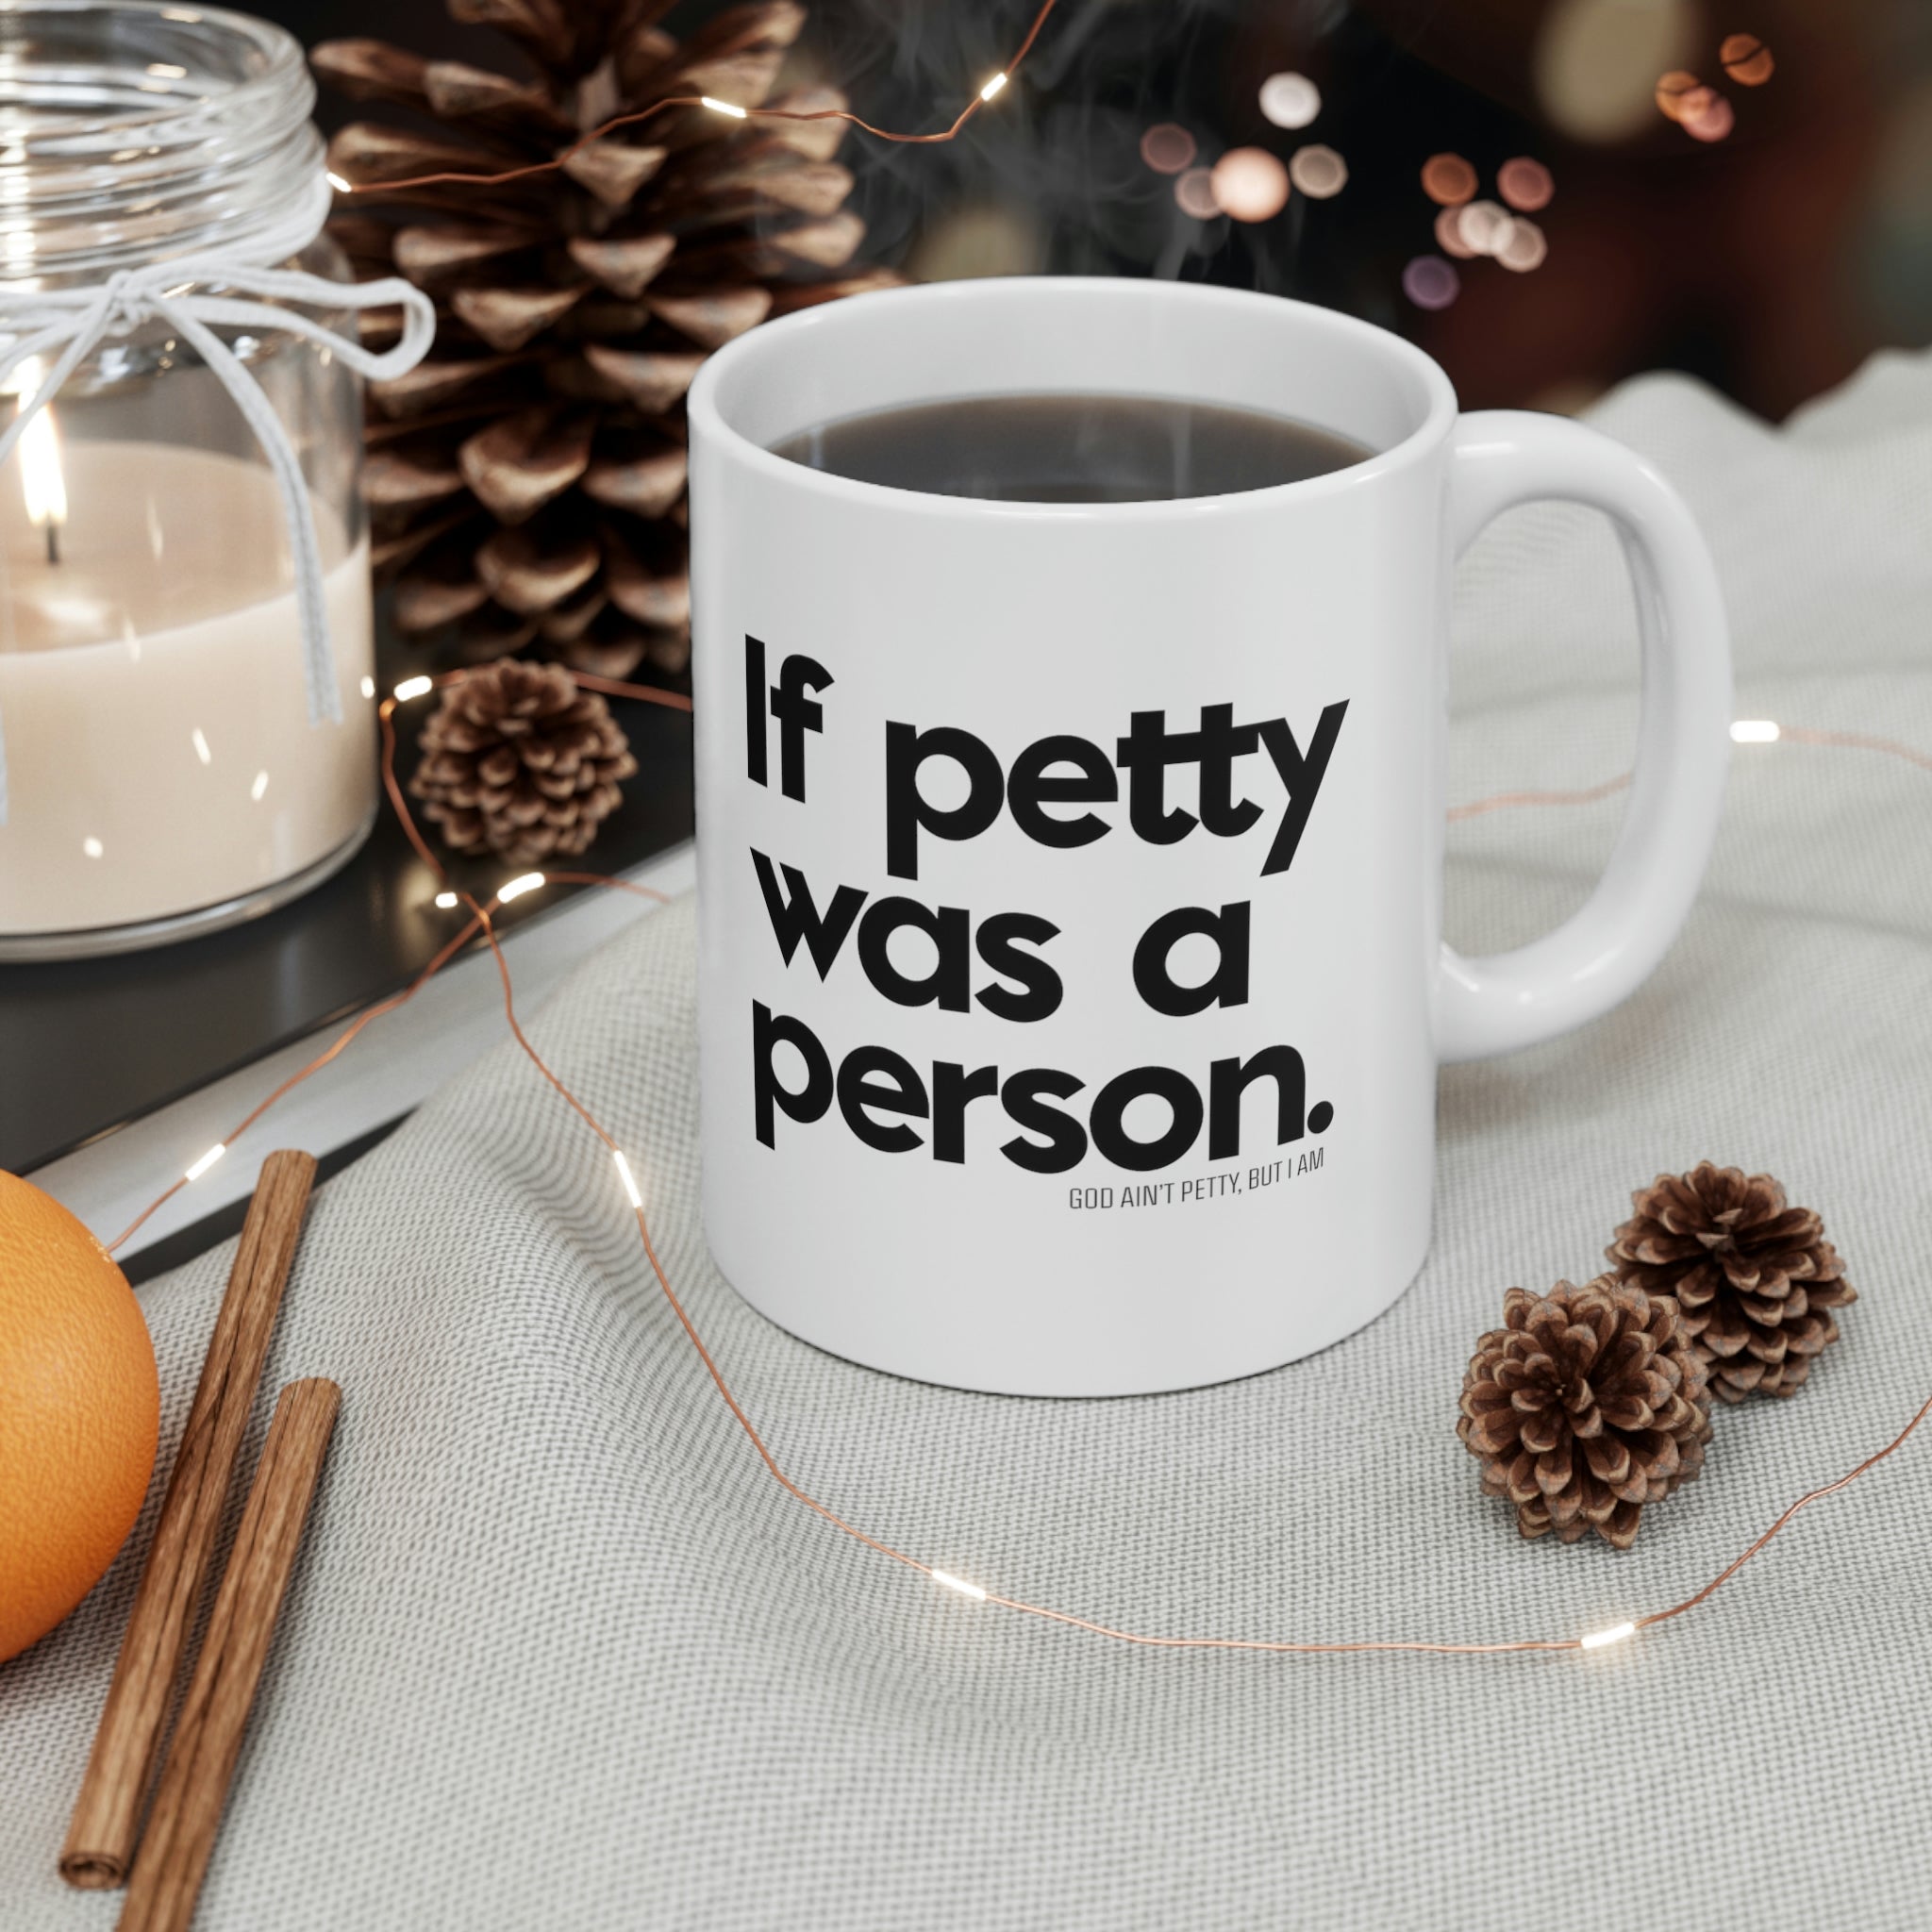 If petty was a person 11oz (White/Black)-Mug-The Original God Ain't Petty But I Am